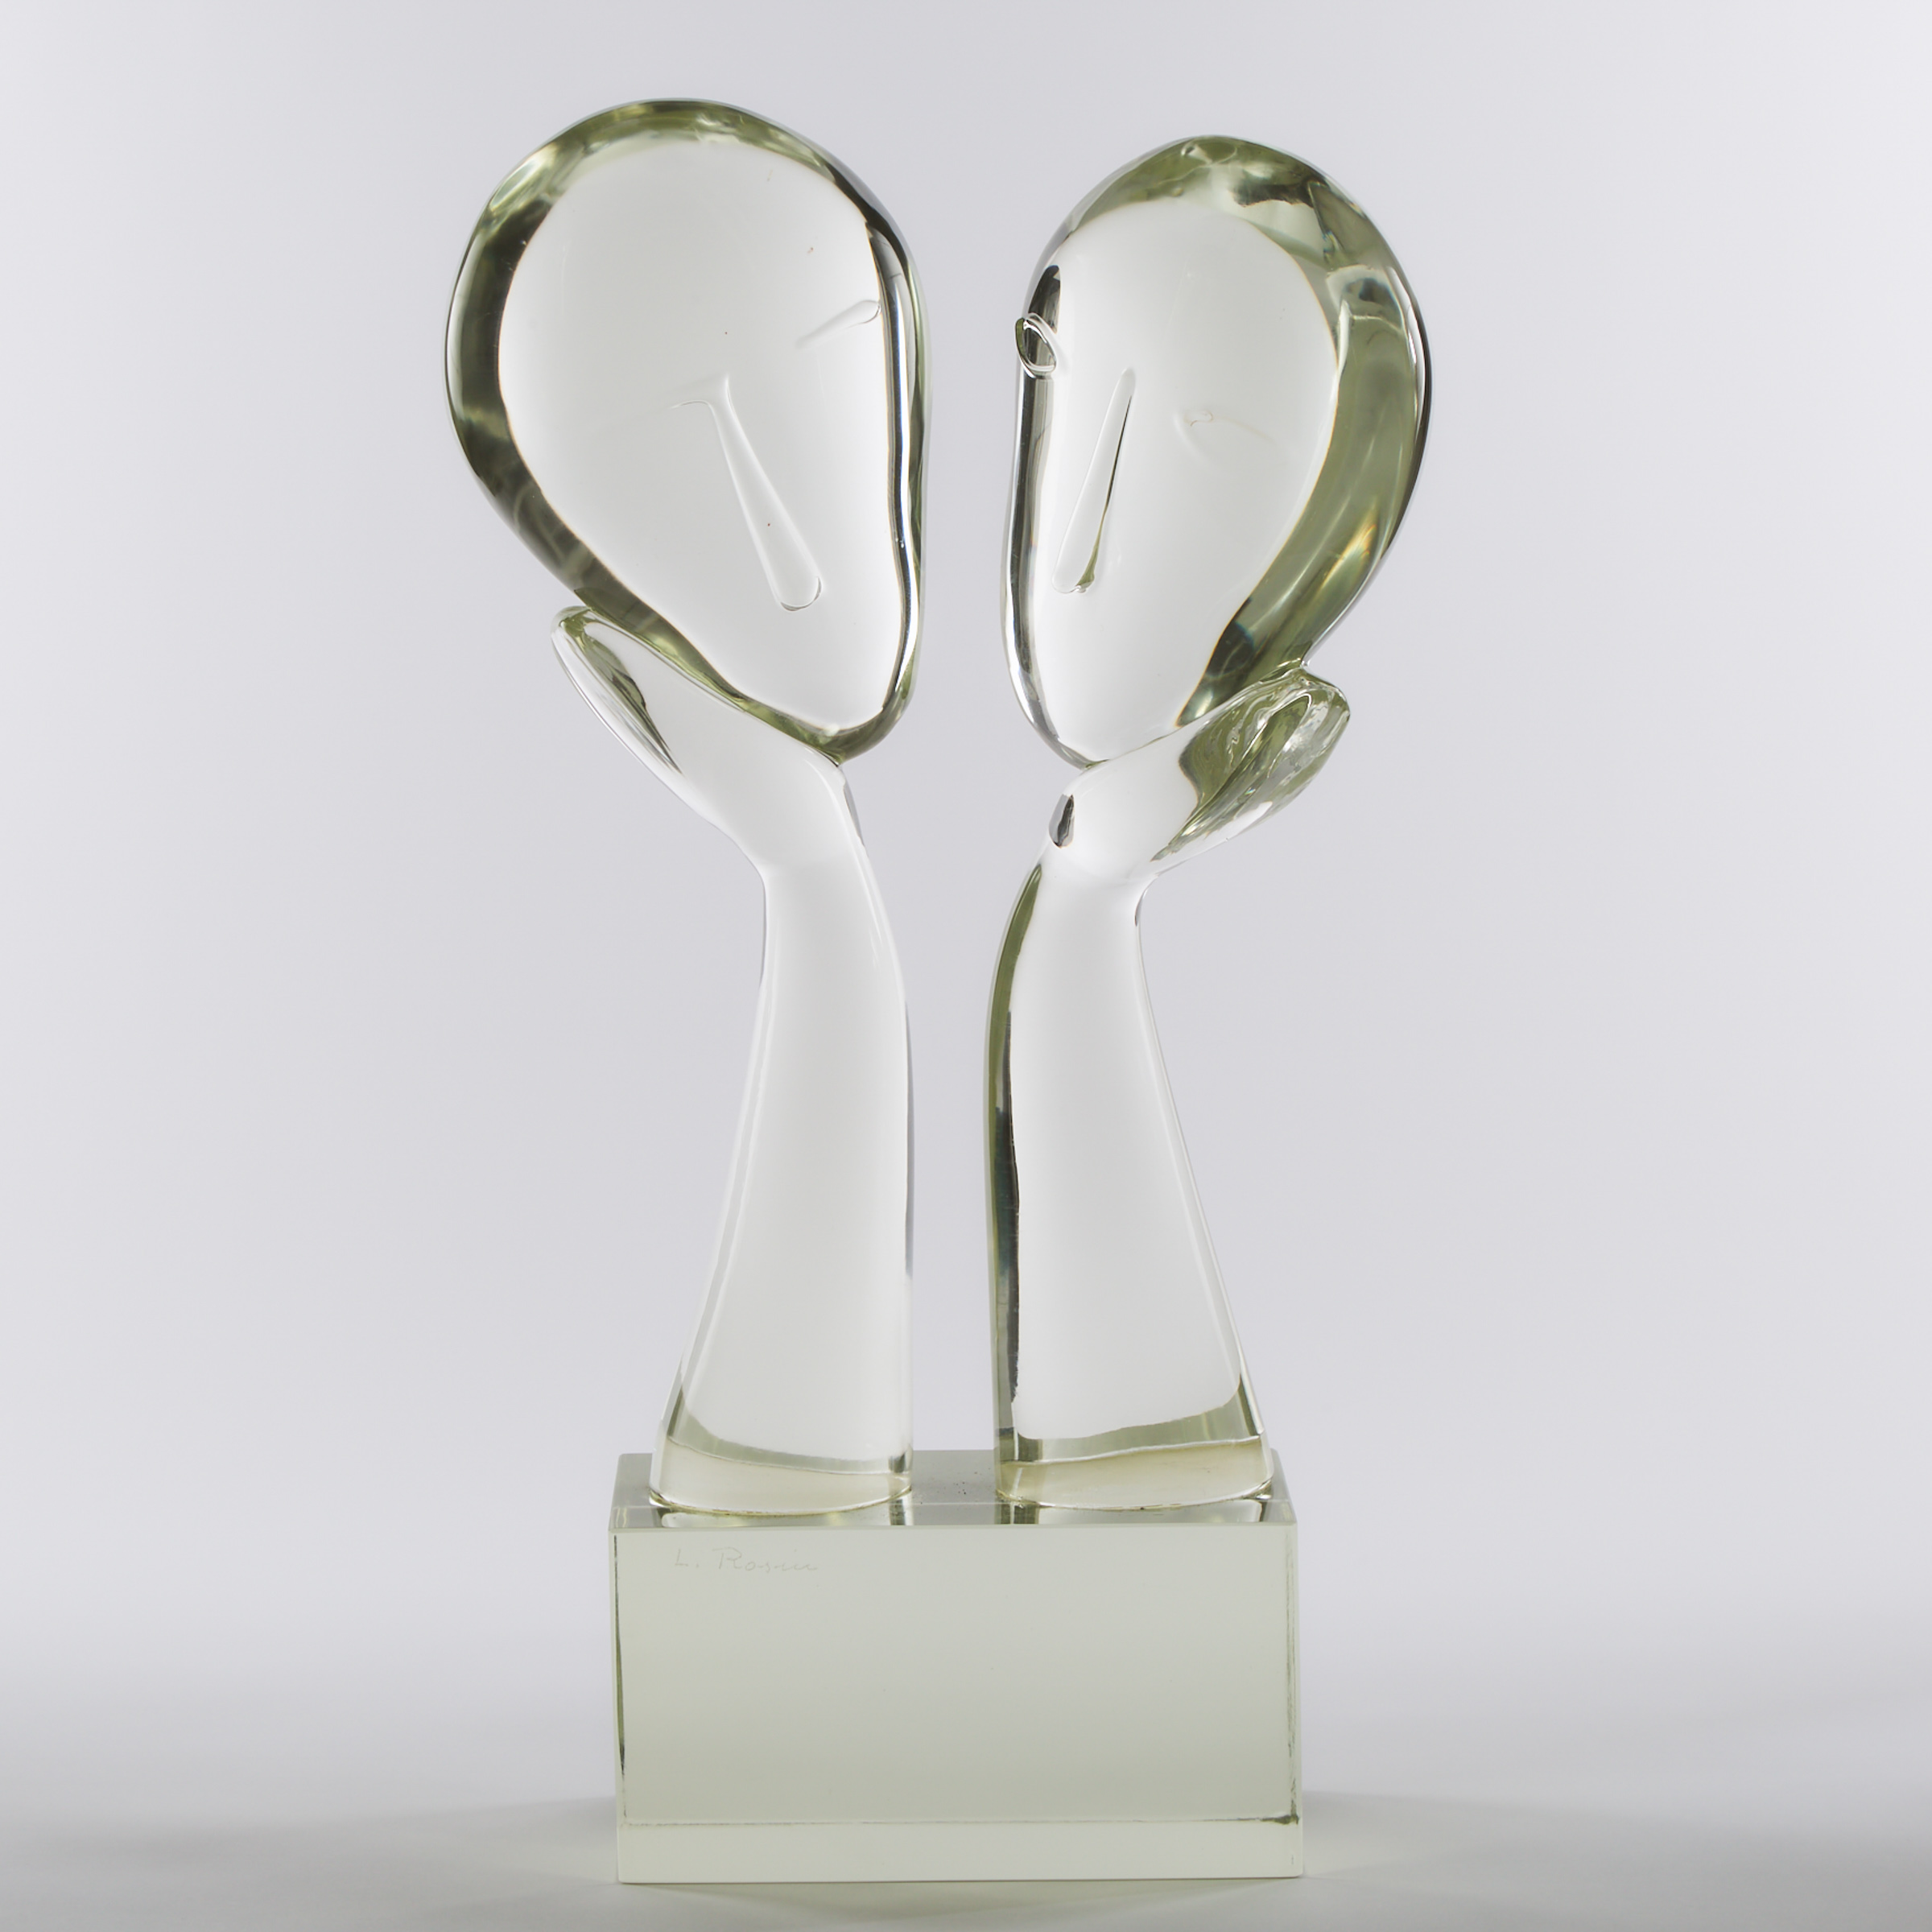 Loredano Rosin Murano Glass Sculpture, 'Two Minds', 1970s